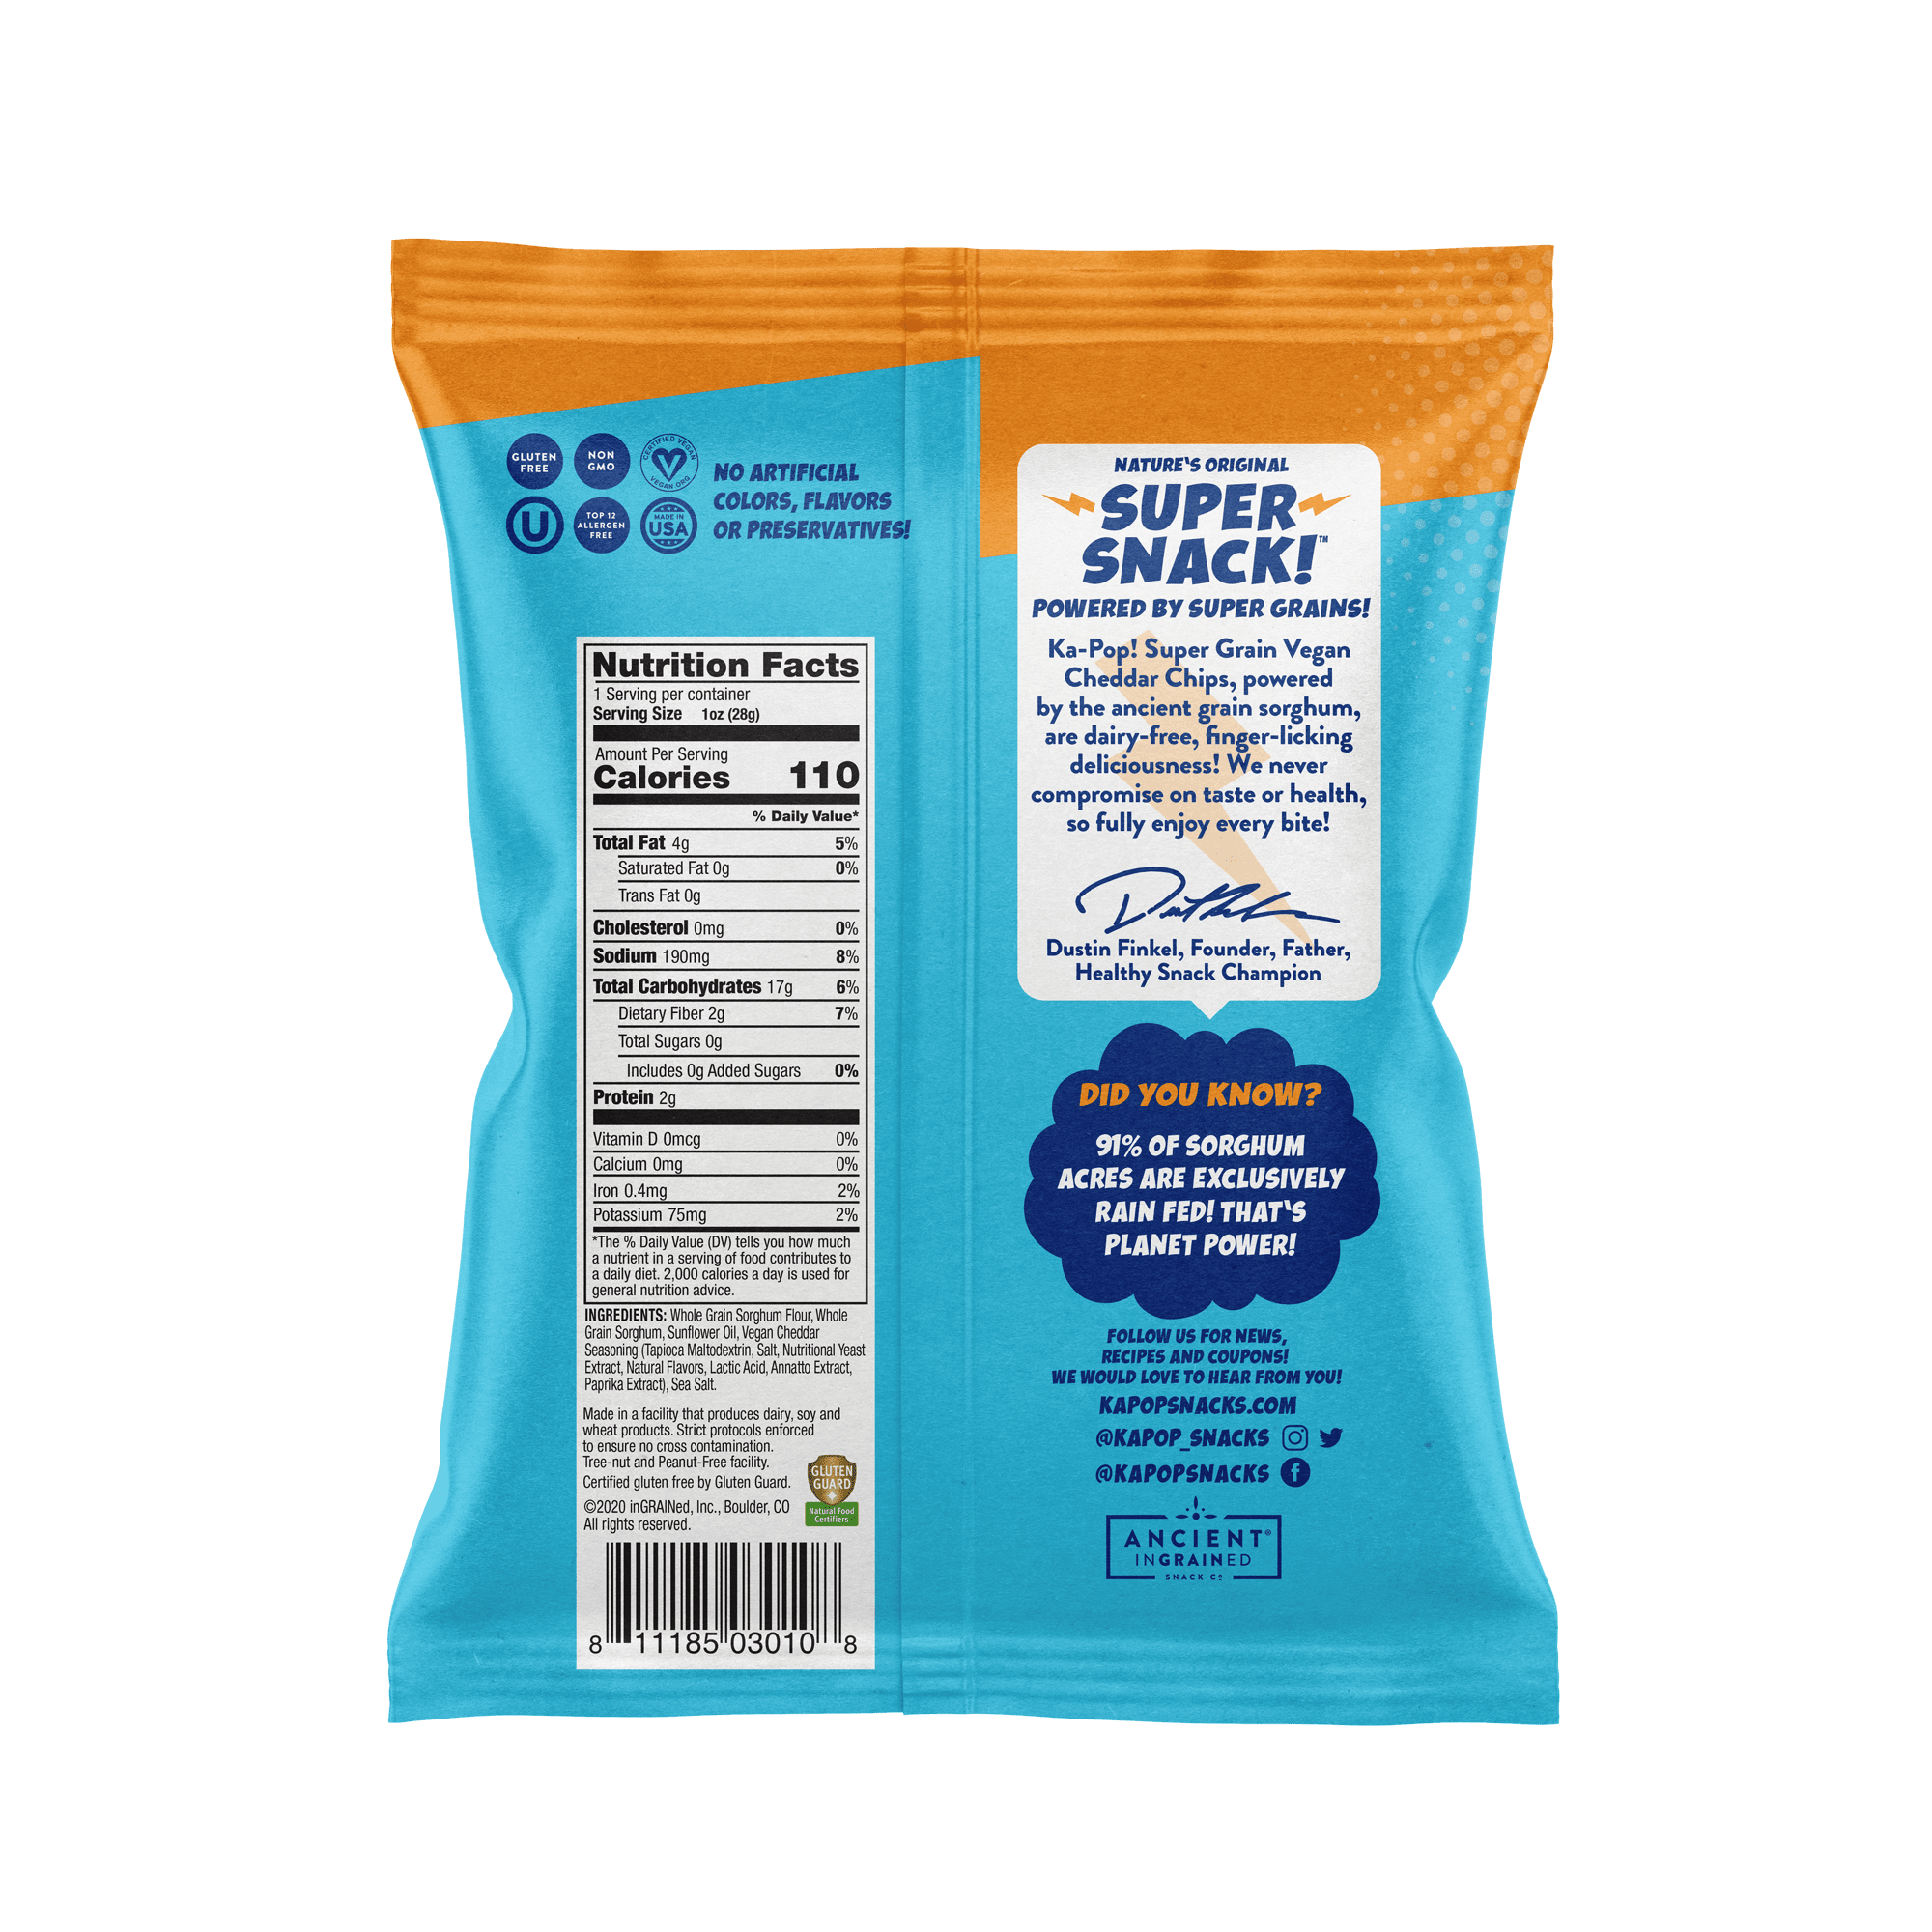 Ka-Pop! Vegan Cheddar Popped Chips 24 units per case 1.0 oz